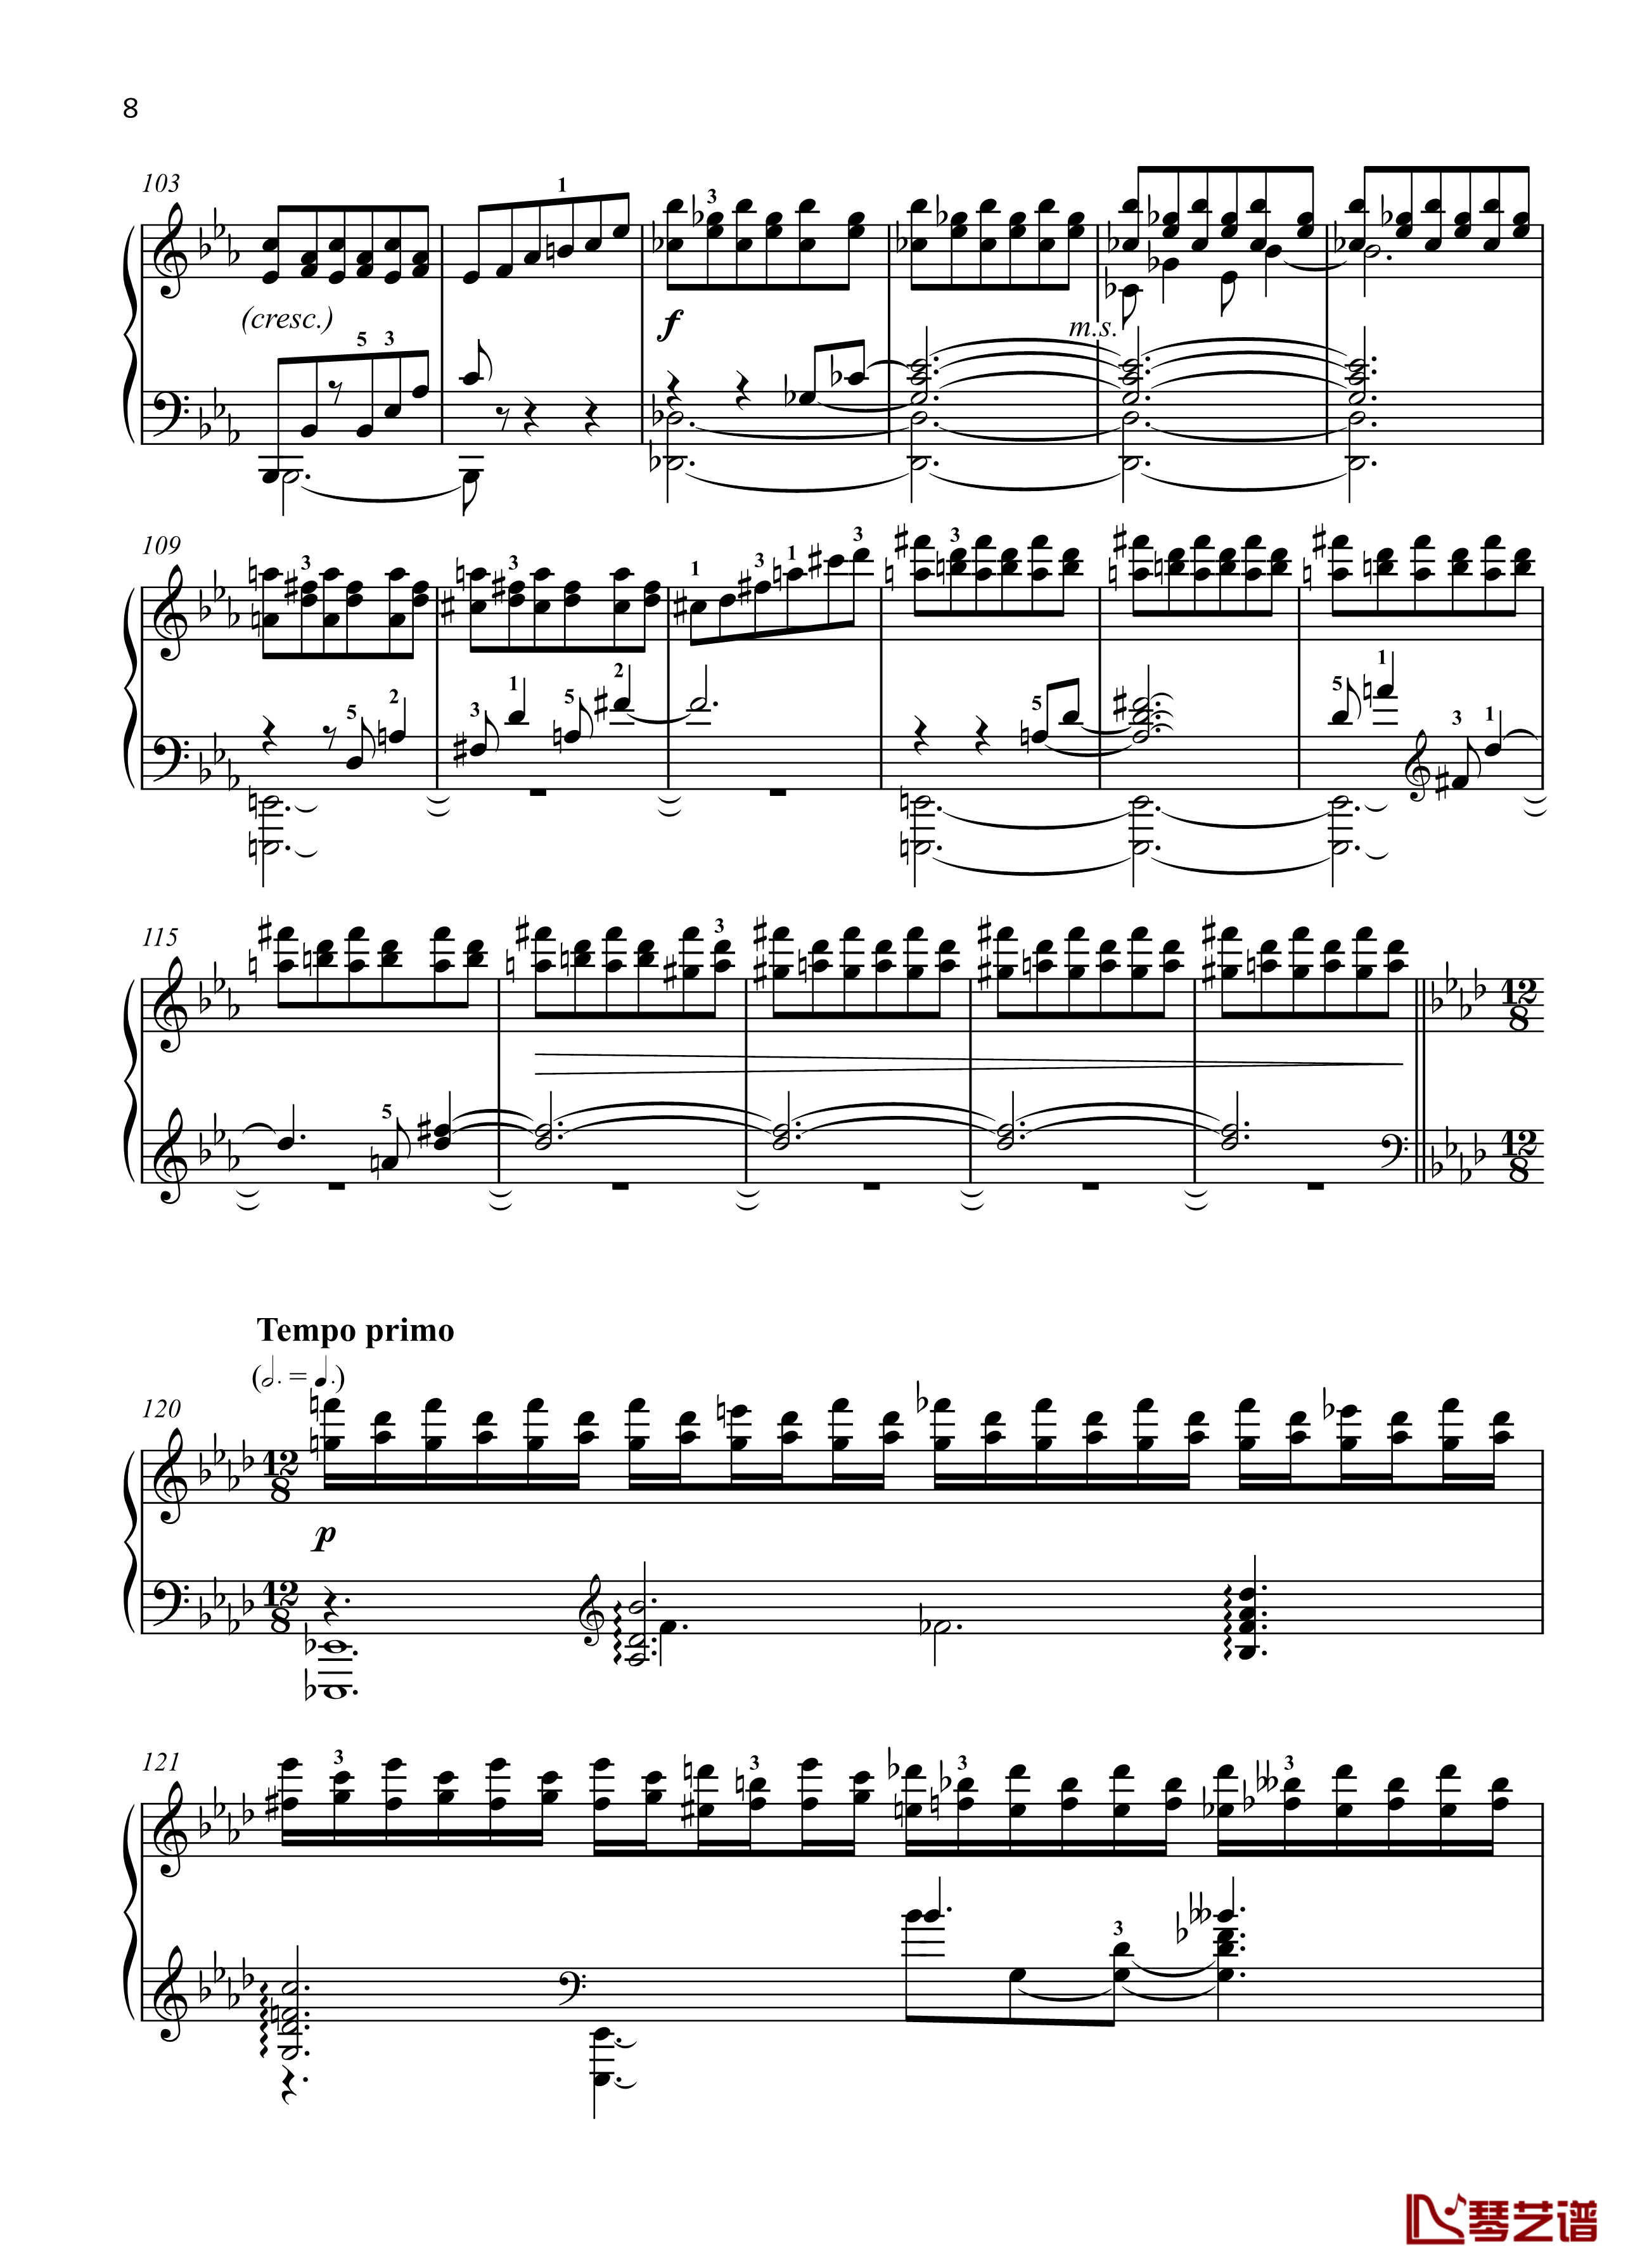 No. 2. Dream. Moderato钢琴谱-带指法- 八首音乐会练习曲 Eight Concert ?tudes Op 40 -爵士-尼古拉·凯帕斯汀8